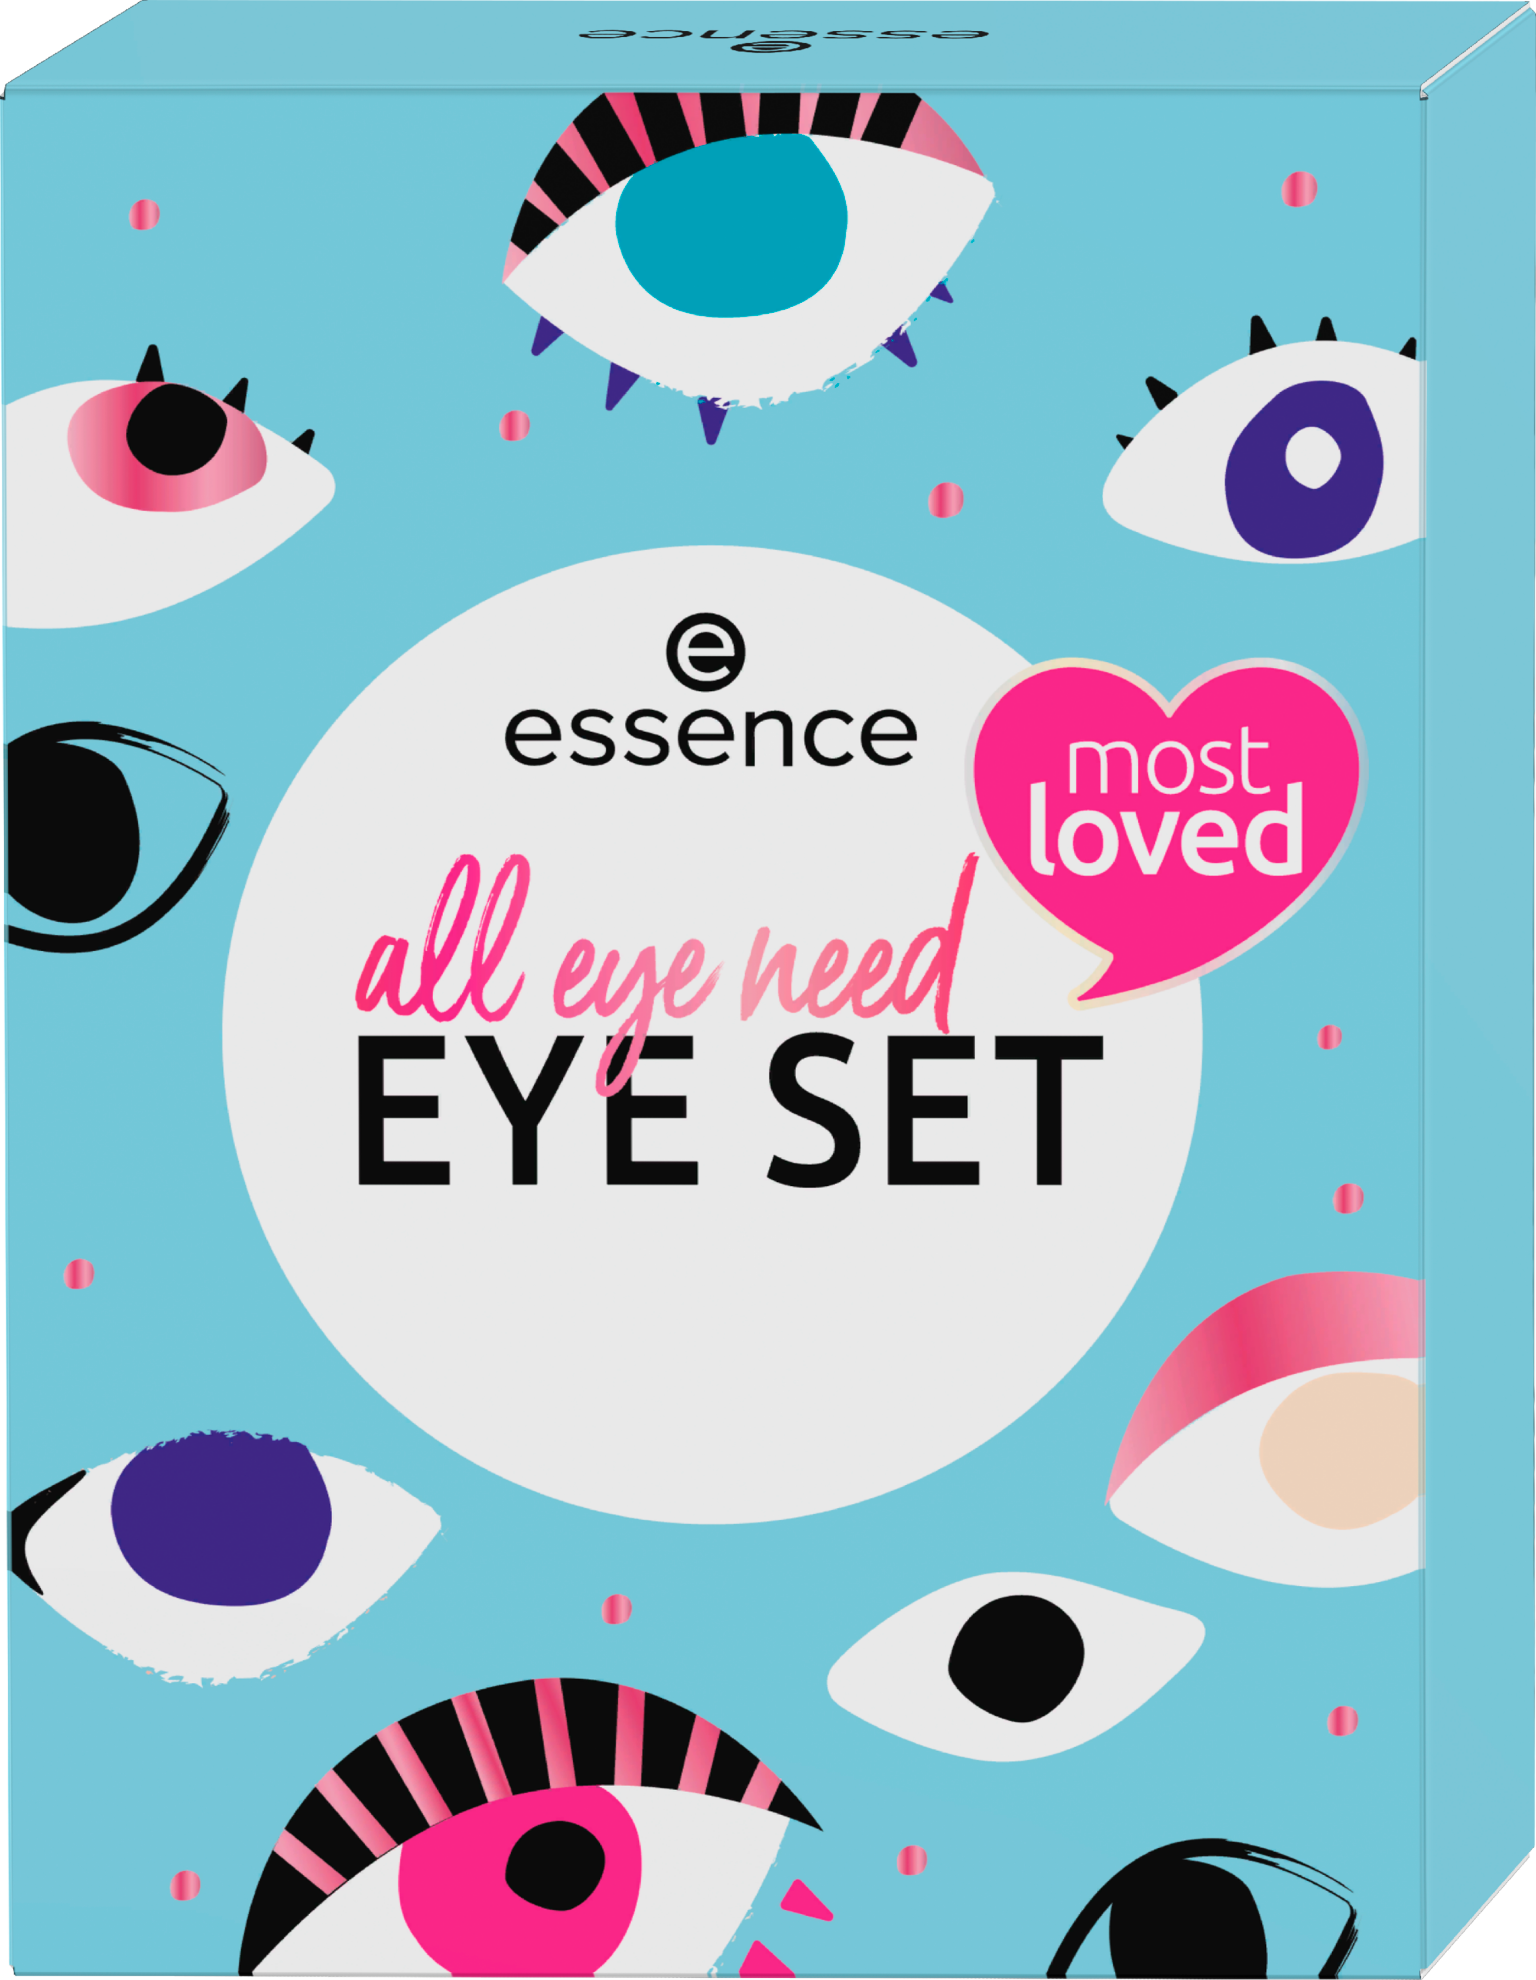 Essence Augen-Make-Up-Set »all eye need EYE SET«, (Set, 4 tlg.)